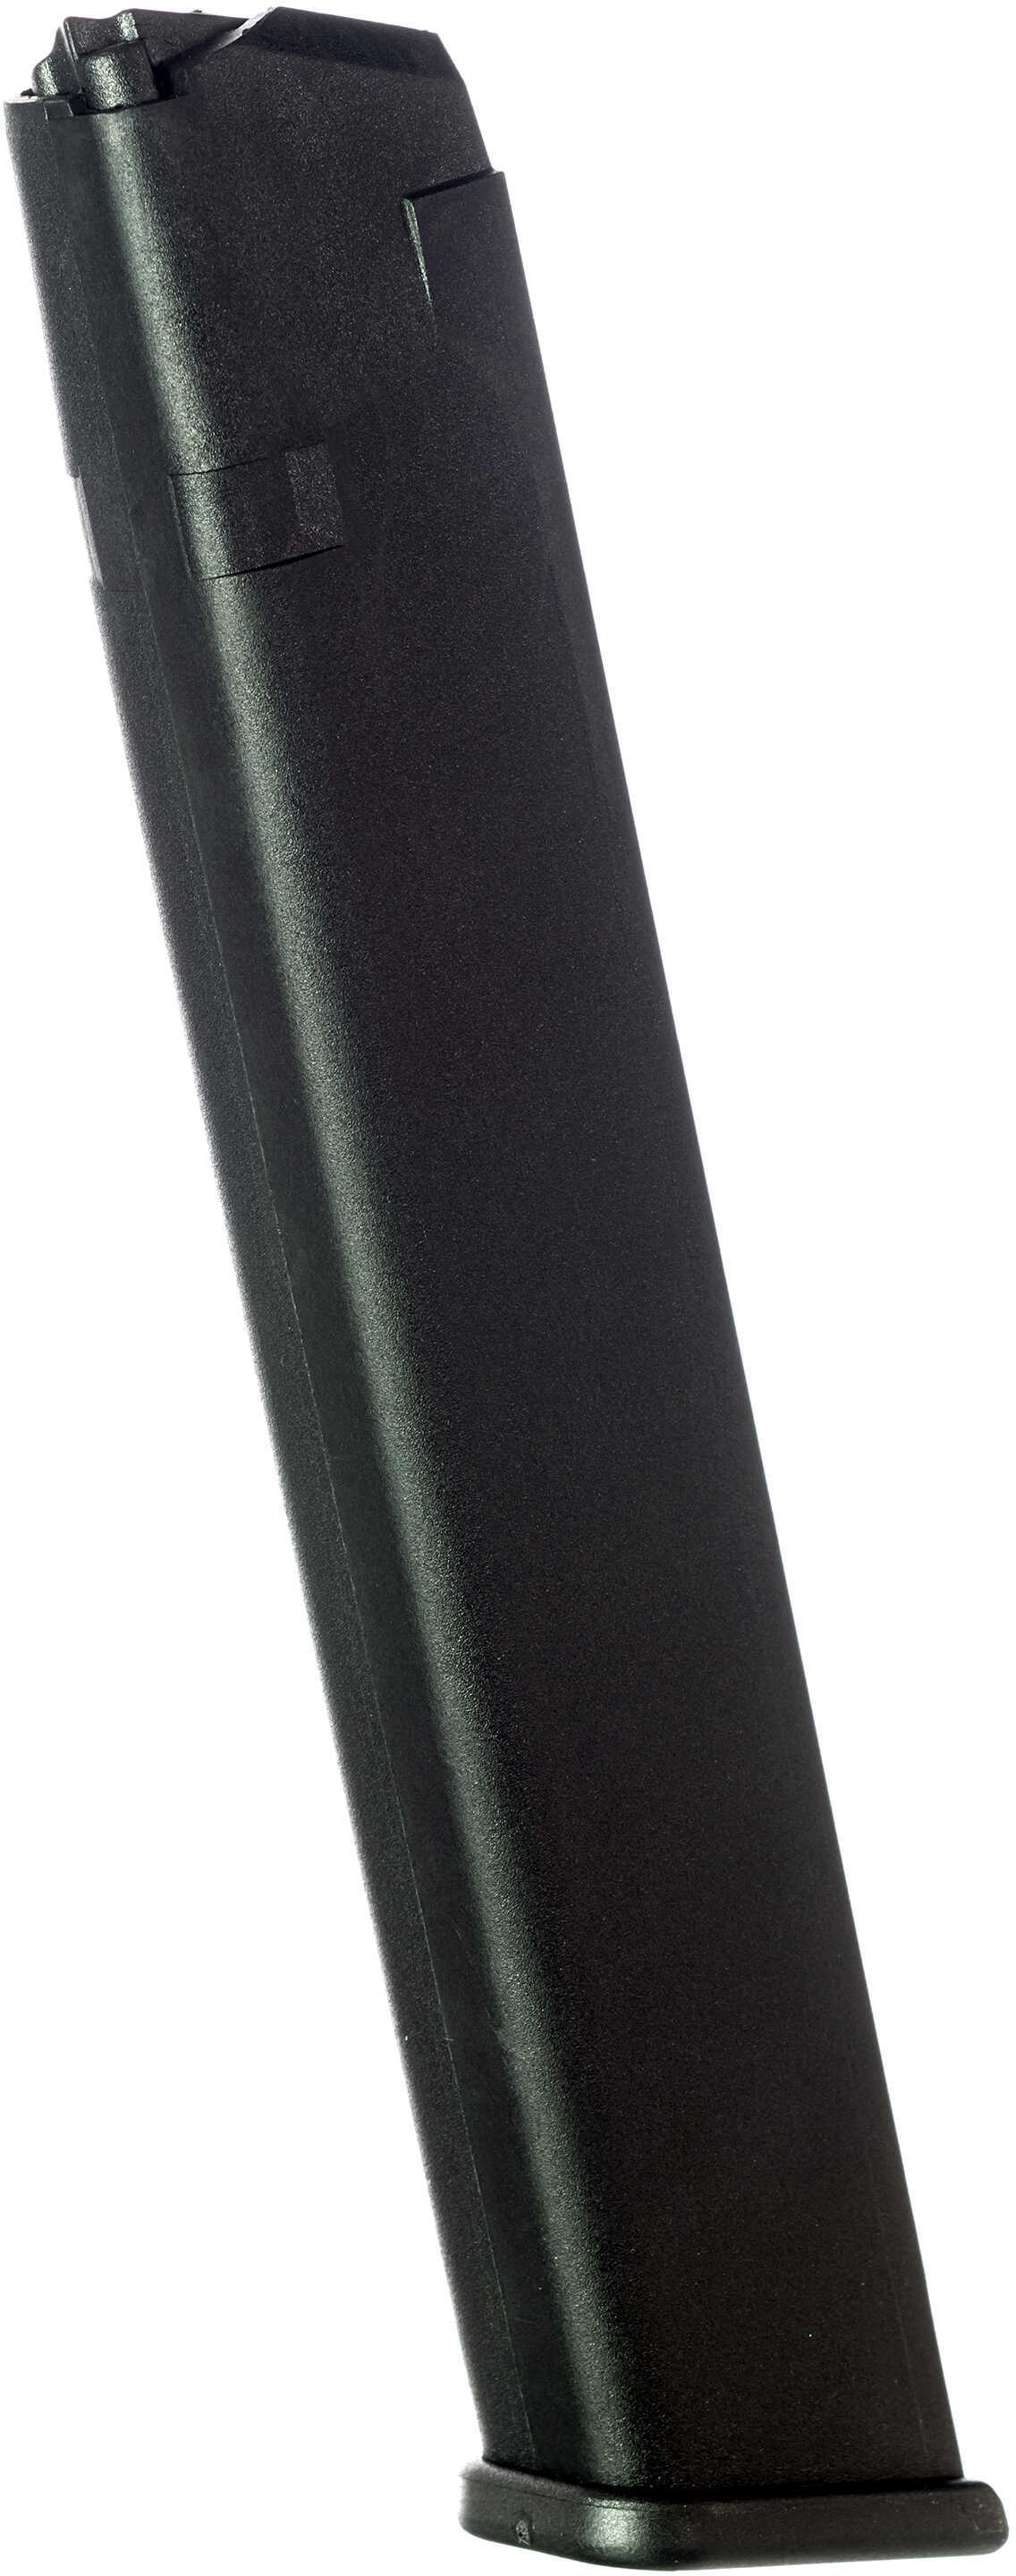 Promag Glock 17/19/26 Magazine 9mm Black Polymer 32/Rd